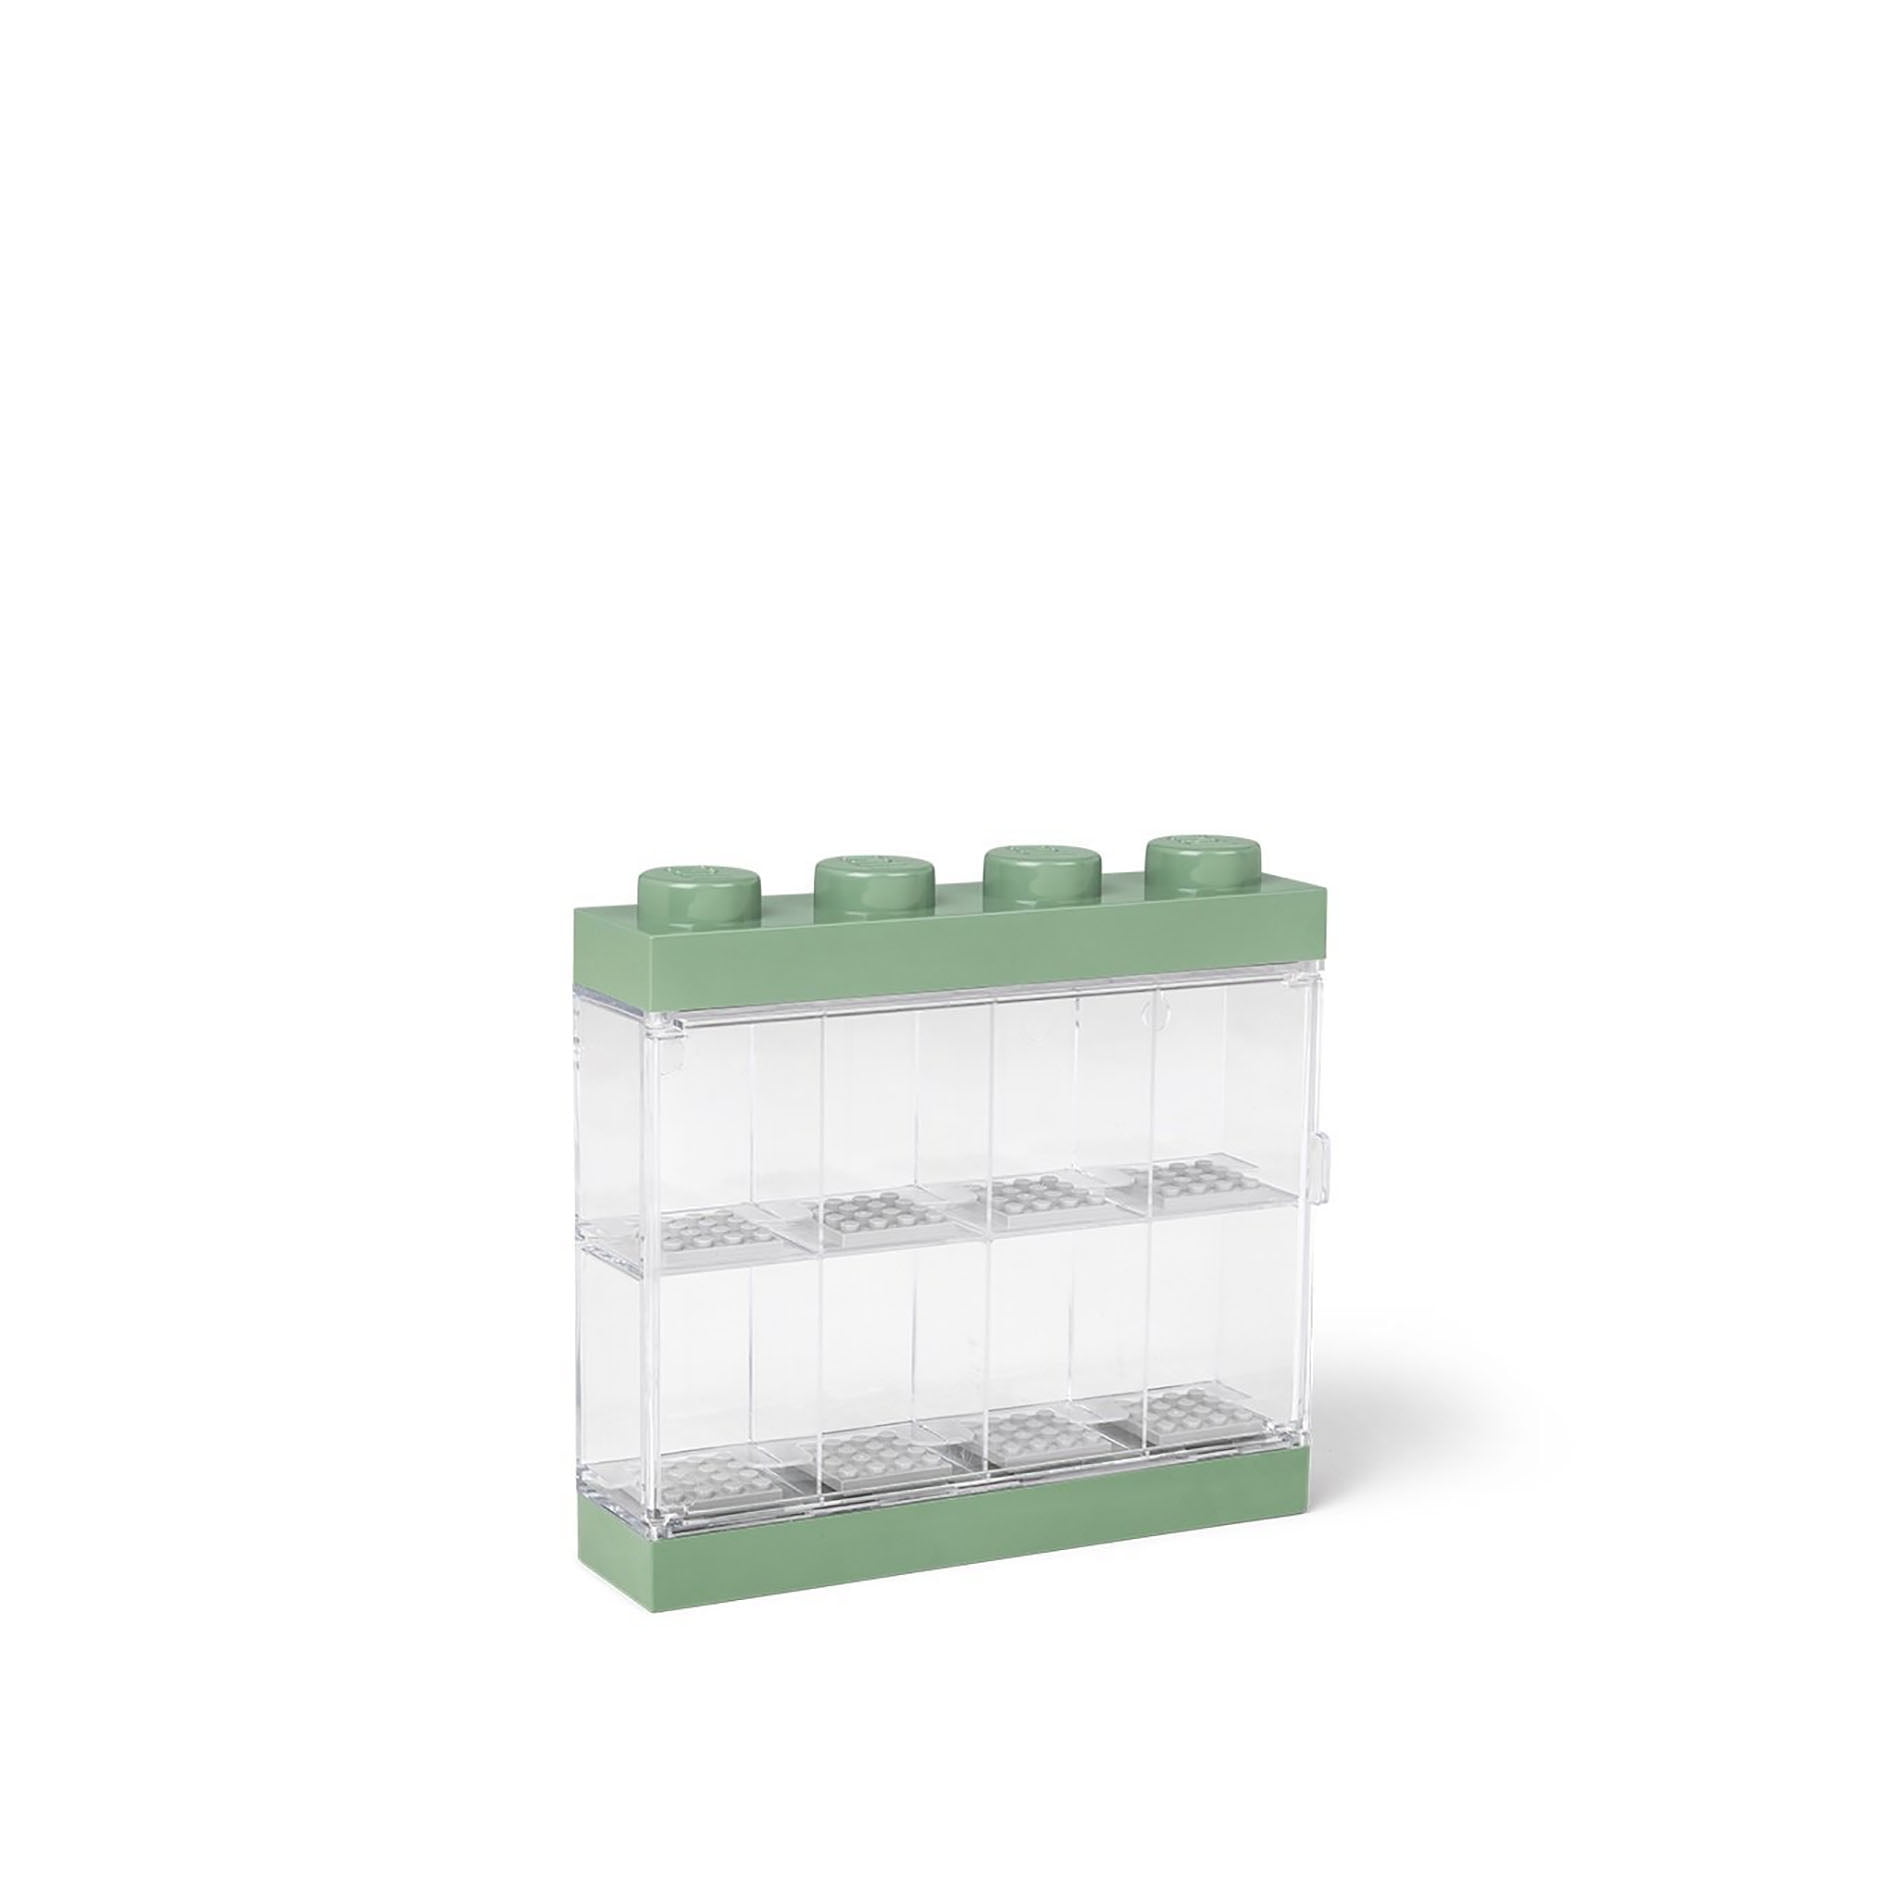 lego minifigure display case walmart